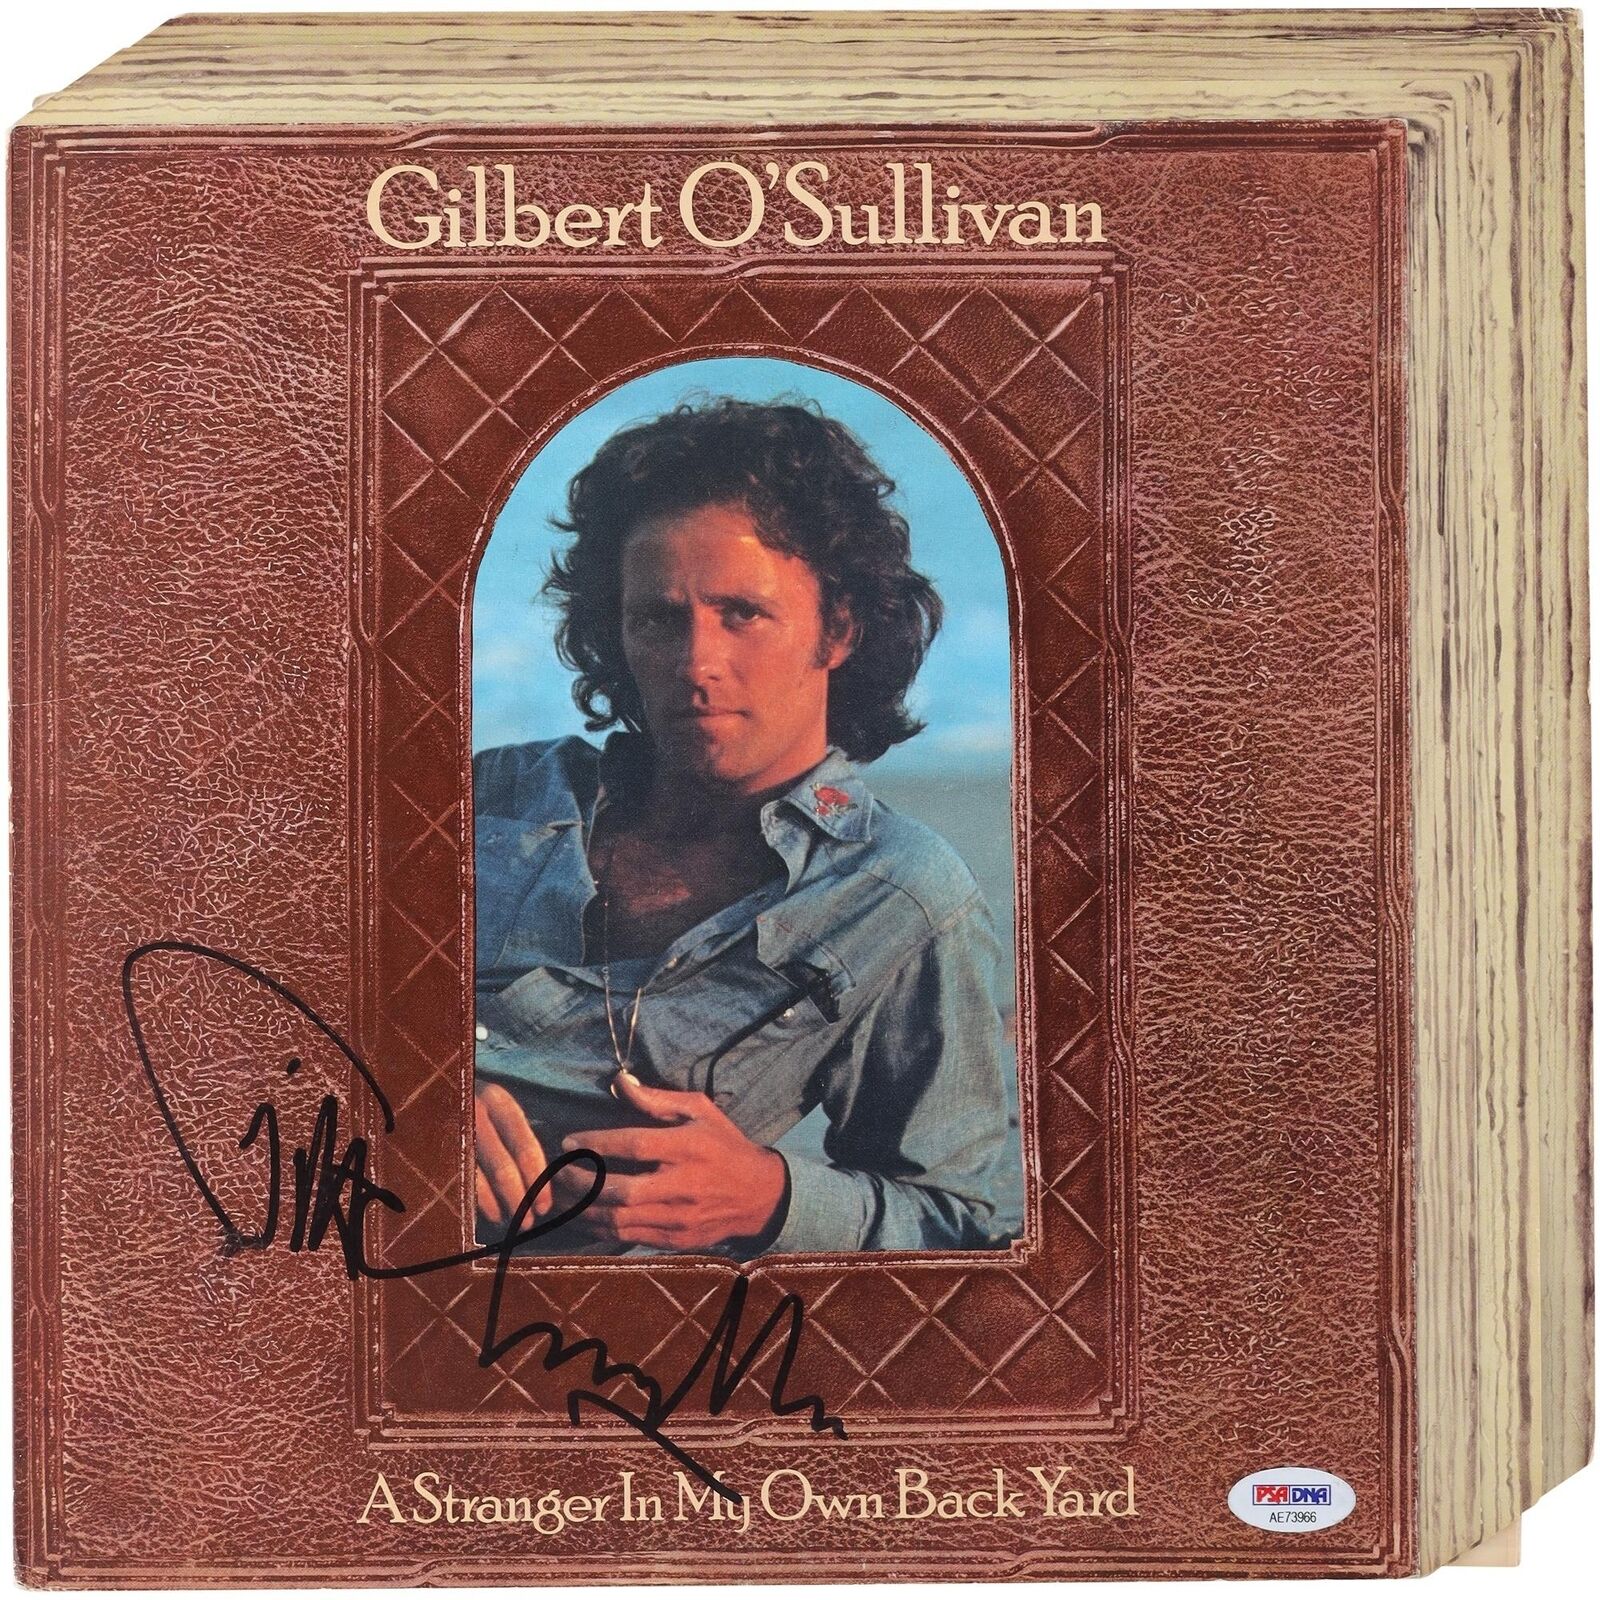 Gilbert O'Sullivan Autographed a Stranger in My Own Back Yard Album PSA